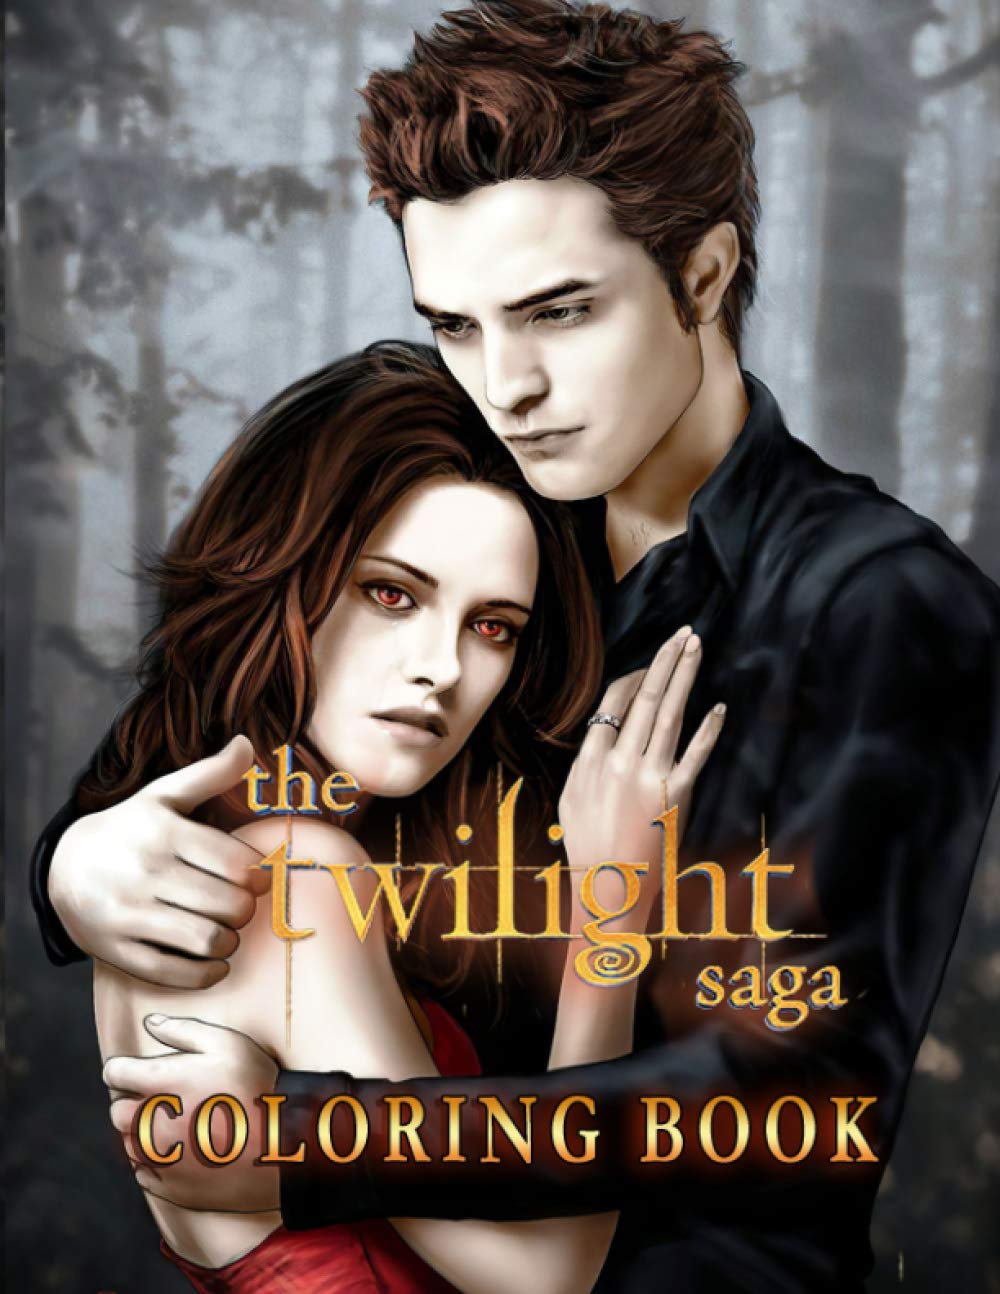 The twilight saga coloring book perfect book for fans of twilight saga with easy coloring pages in high